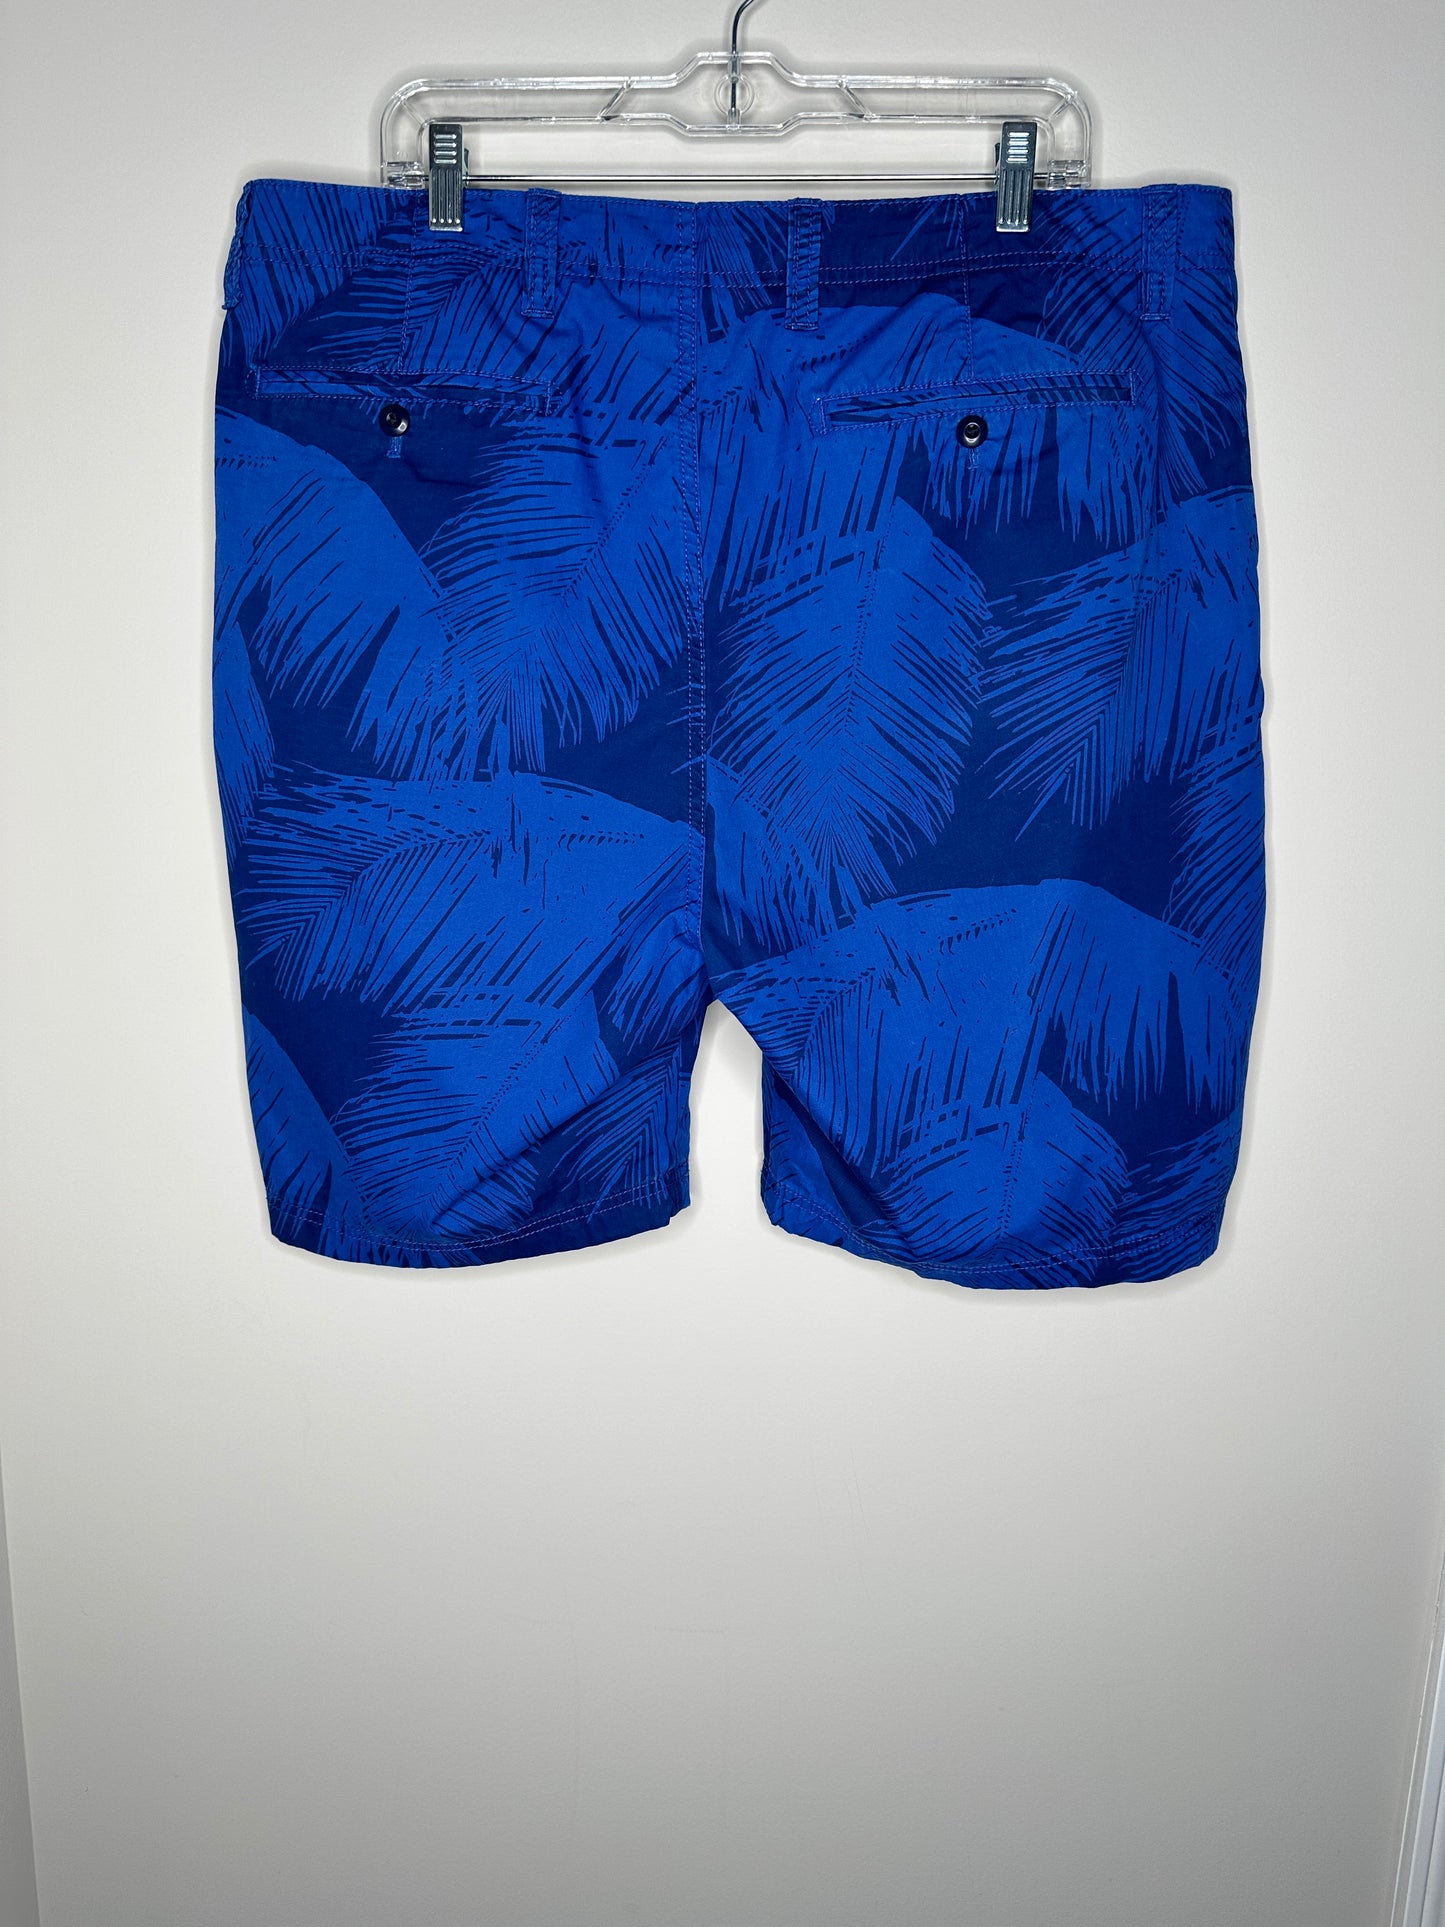 Nautica Size 38W Blue Botanical Print Shorts, 8.25" inseam